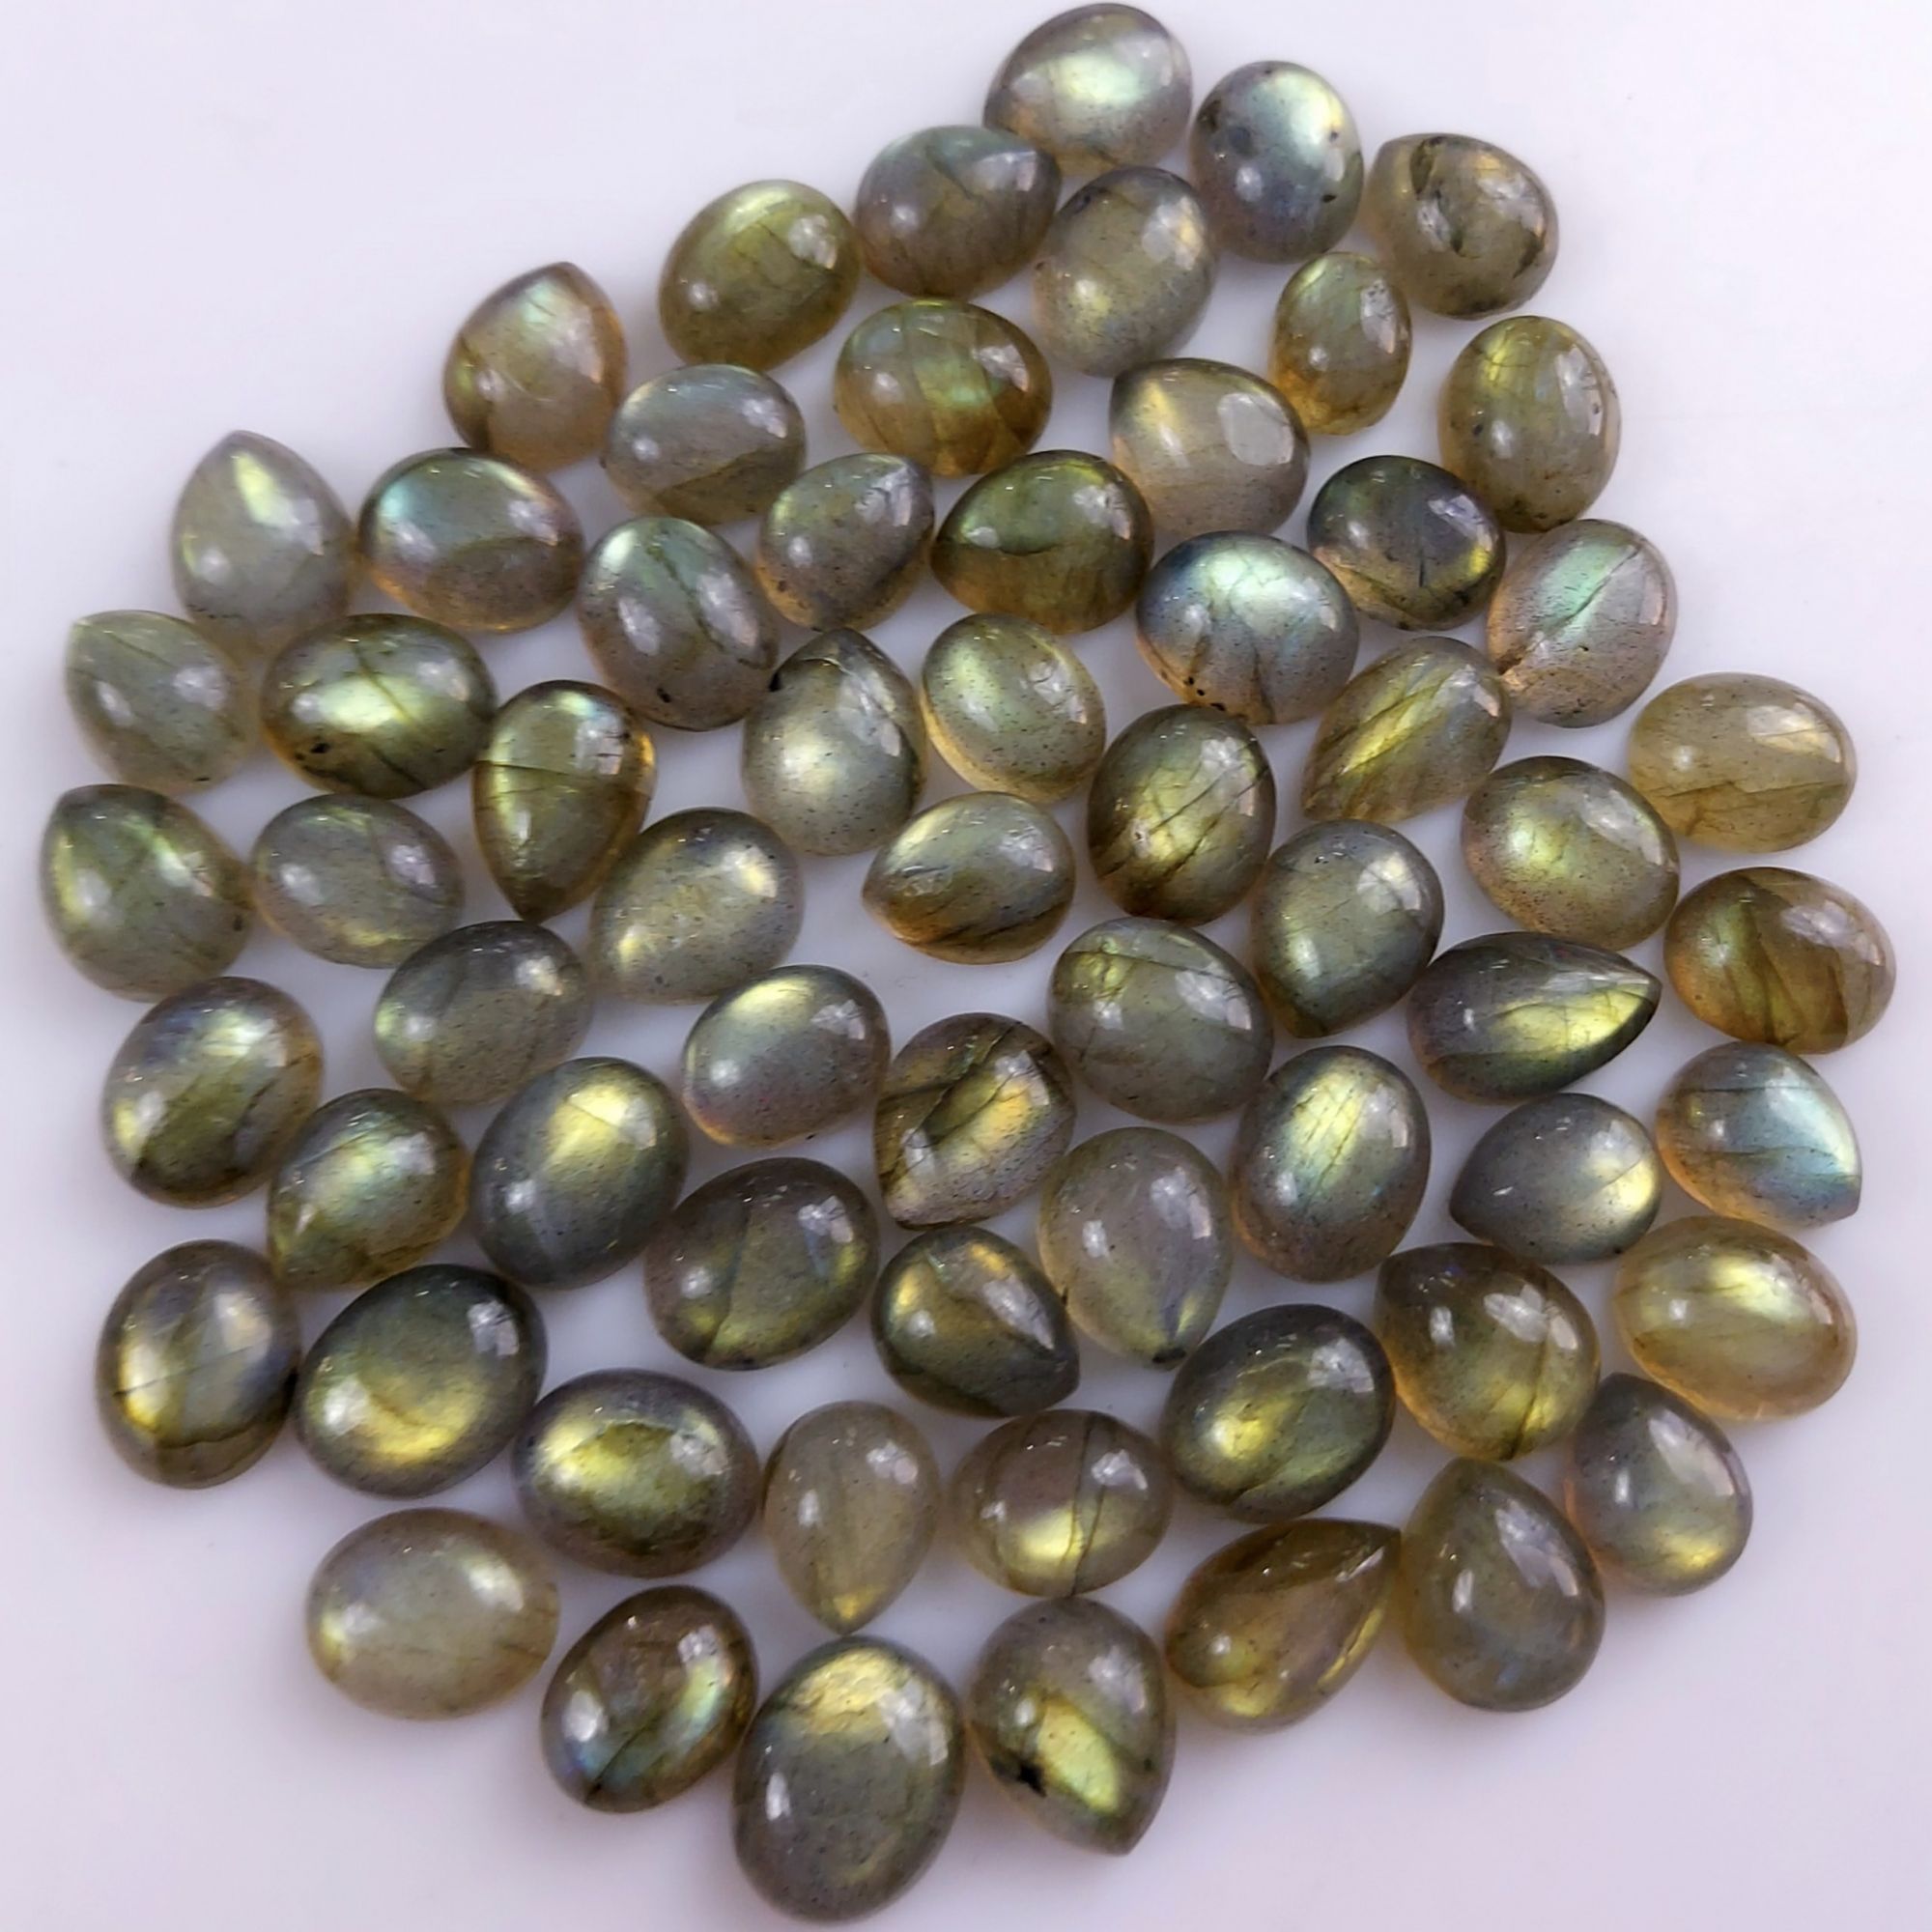 64 Pcs246Cts Natural Multifire Labradorite Loose Cabochon Gemstone Lot for Jewelry Making  10x6 8x6mm#1058